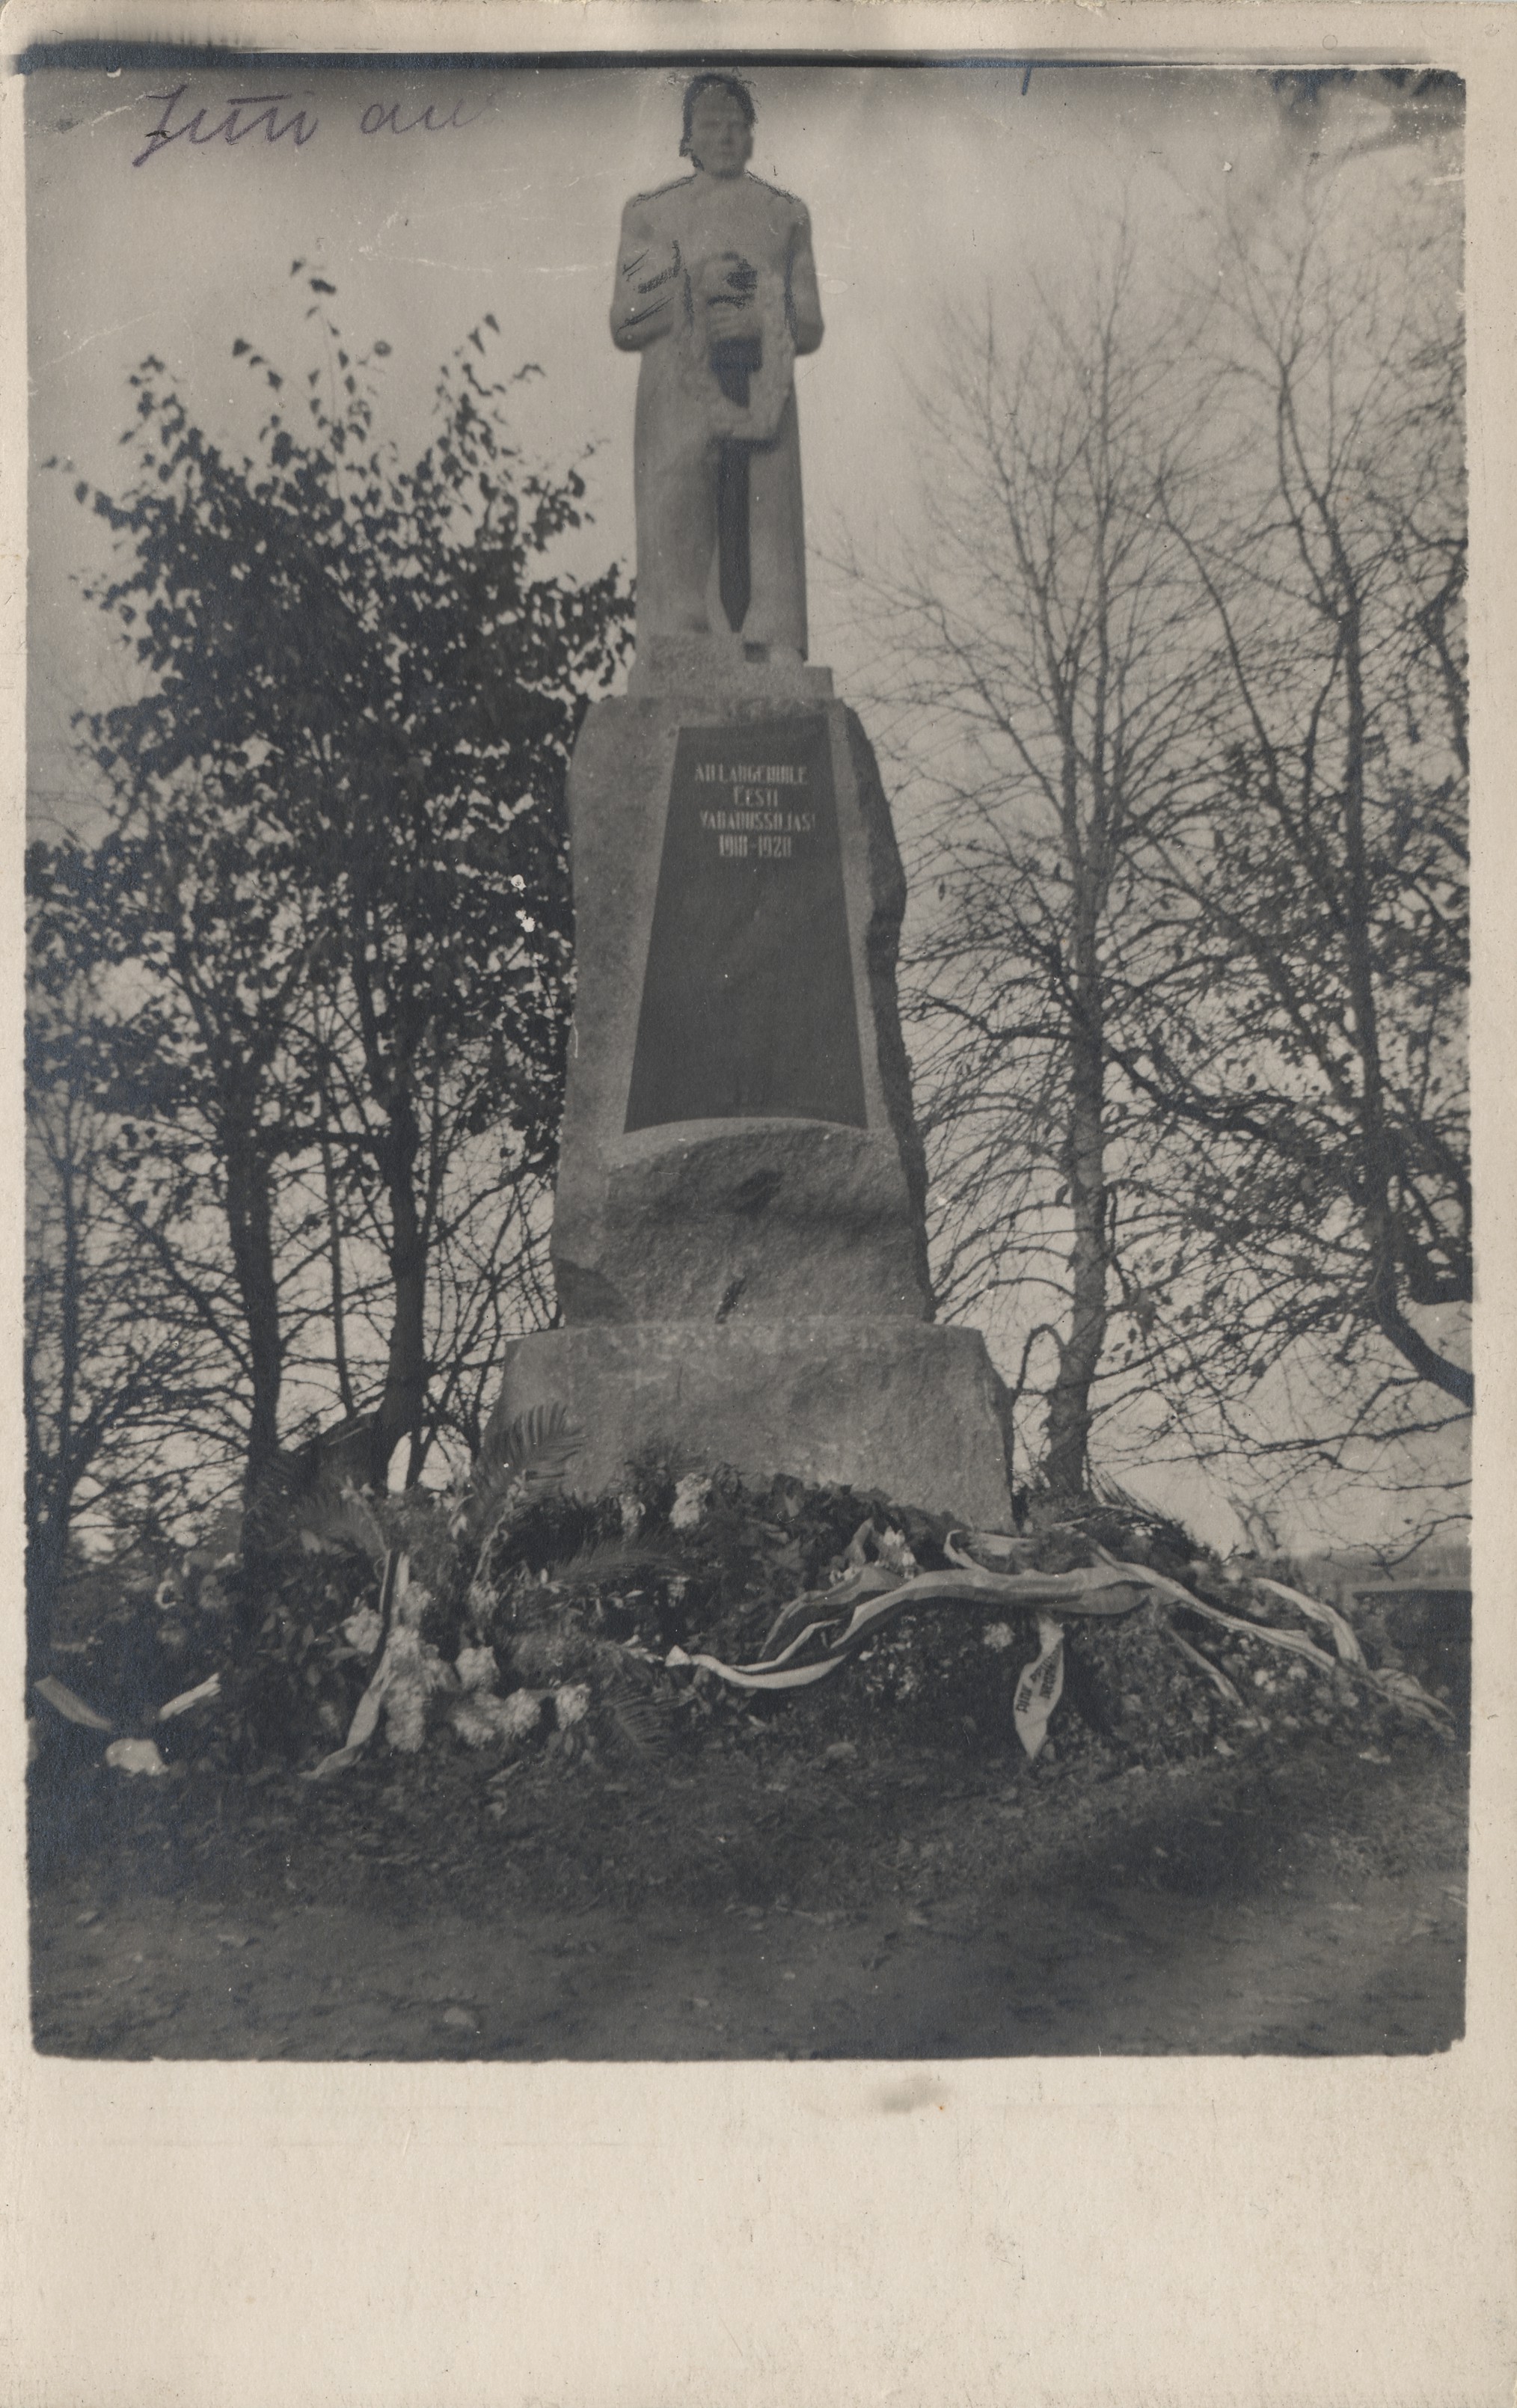 Jüri [Memorial of the War of Freedom]